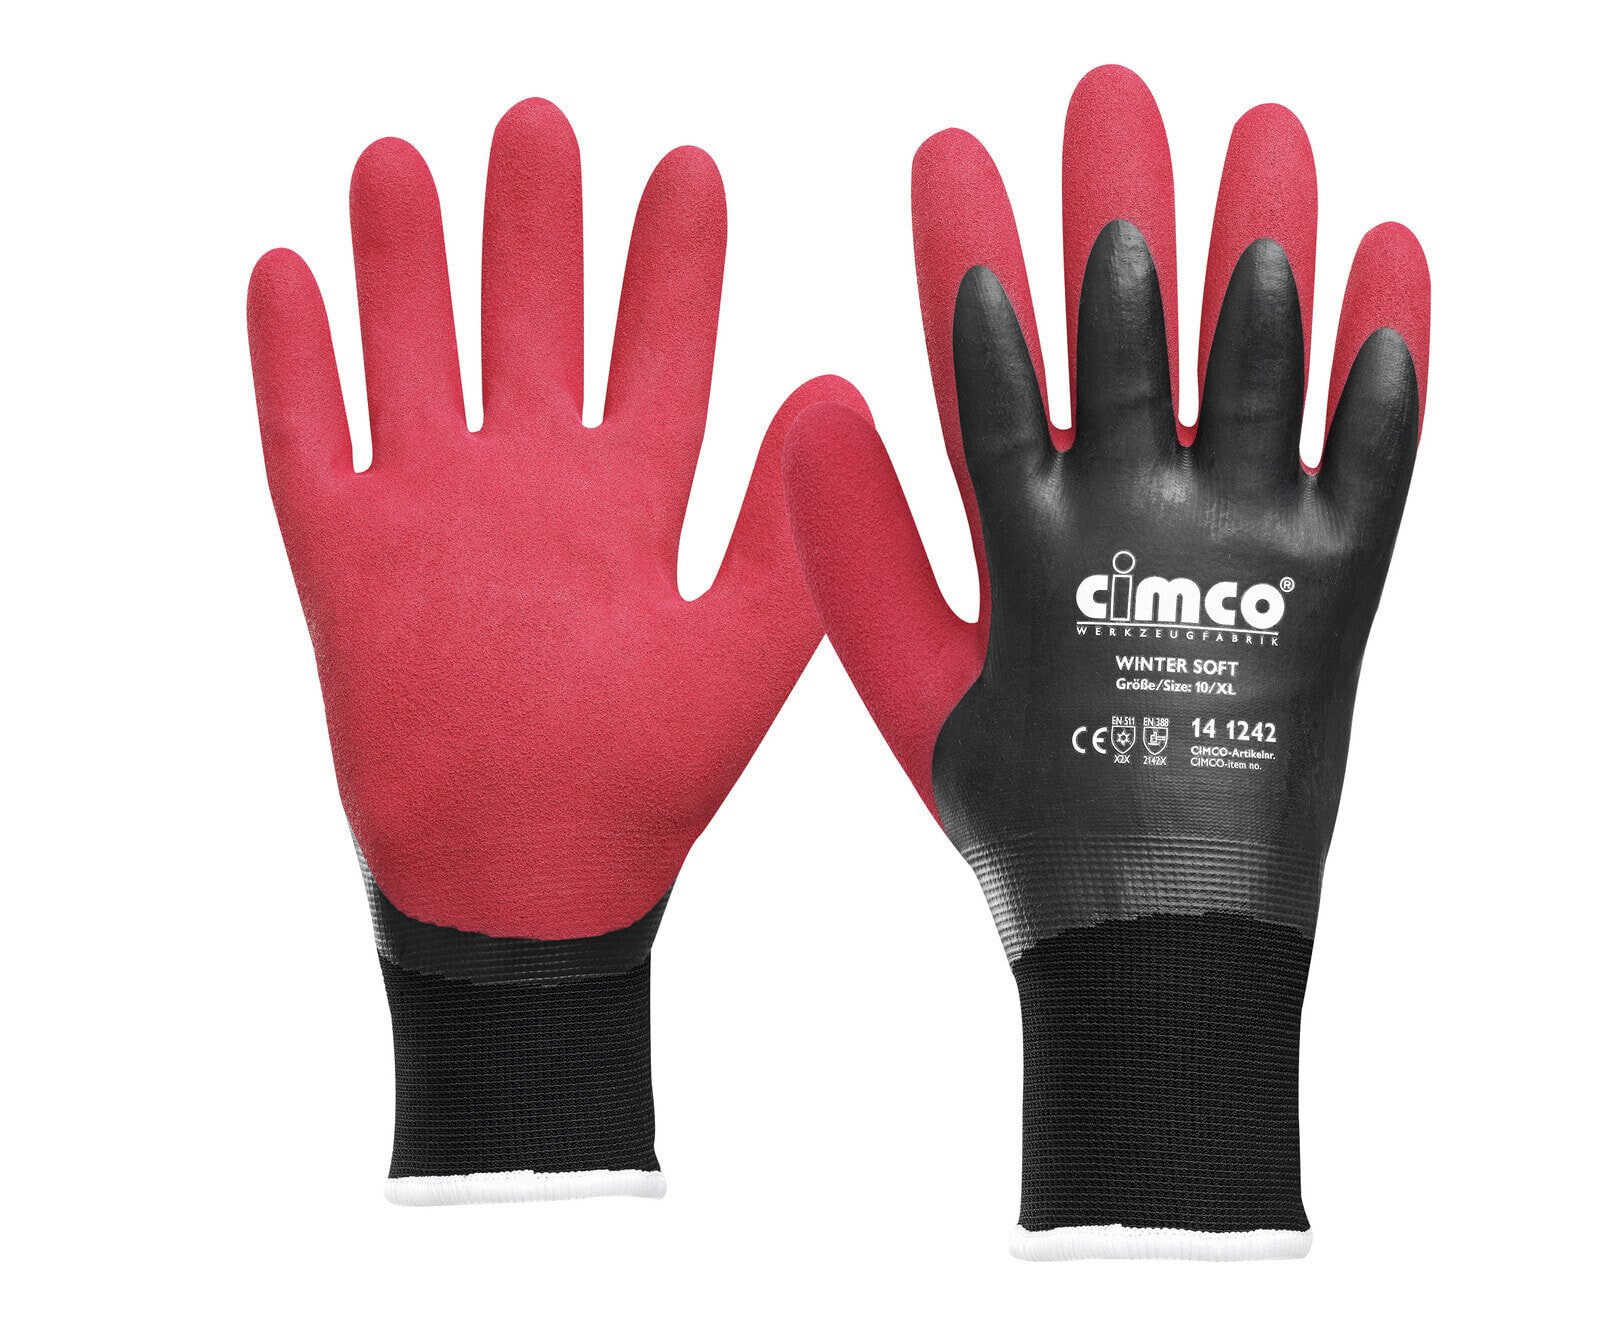 141242 - Workshop gloves - Black - Red - XL - EUE - Adult - Unisex